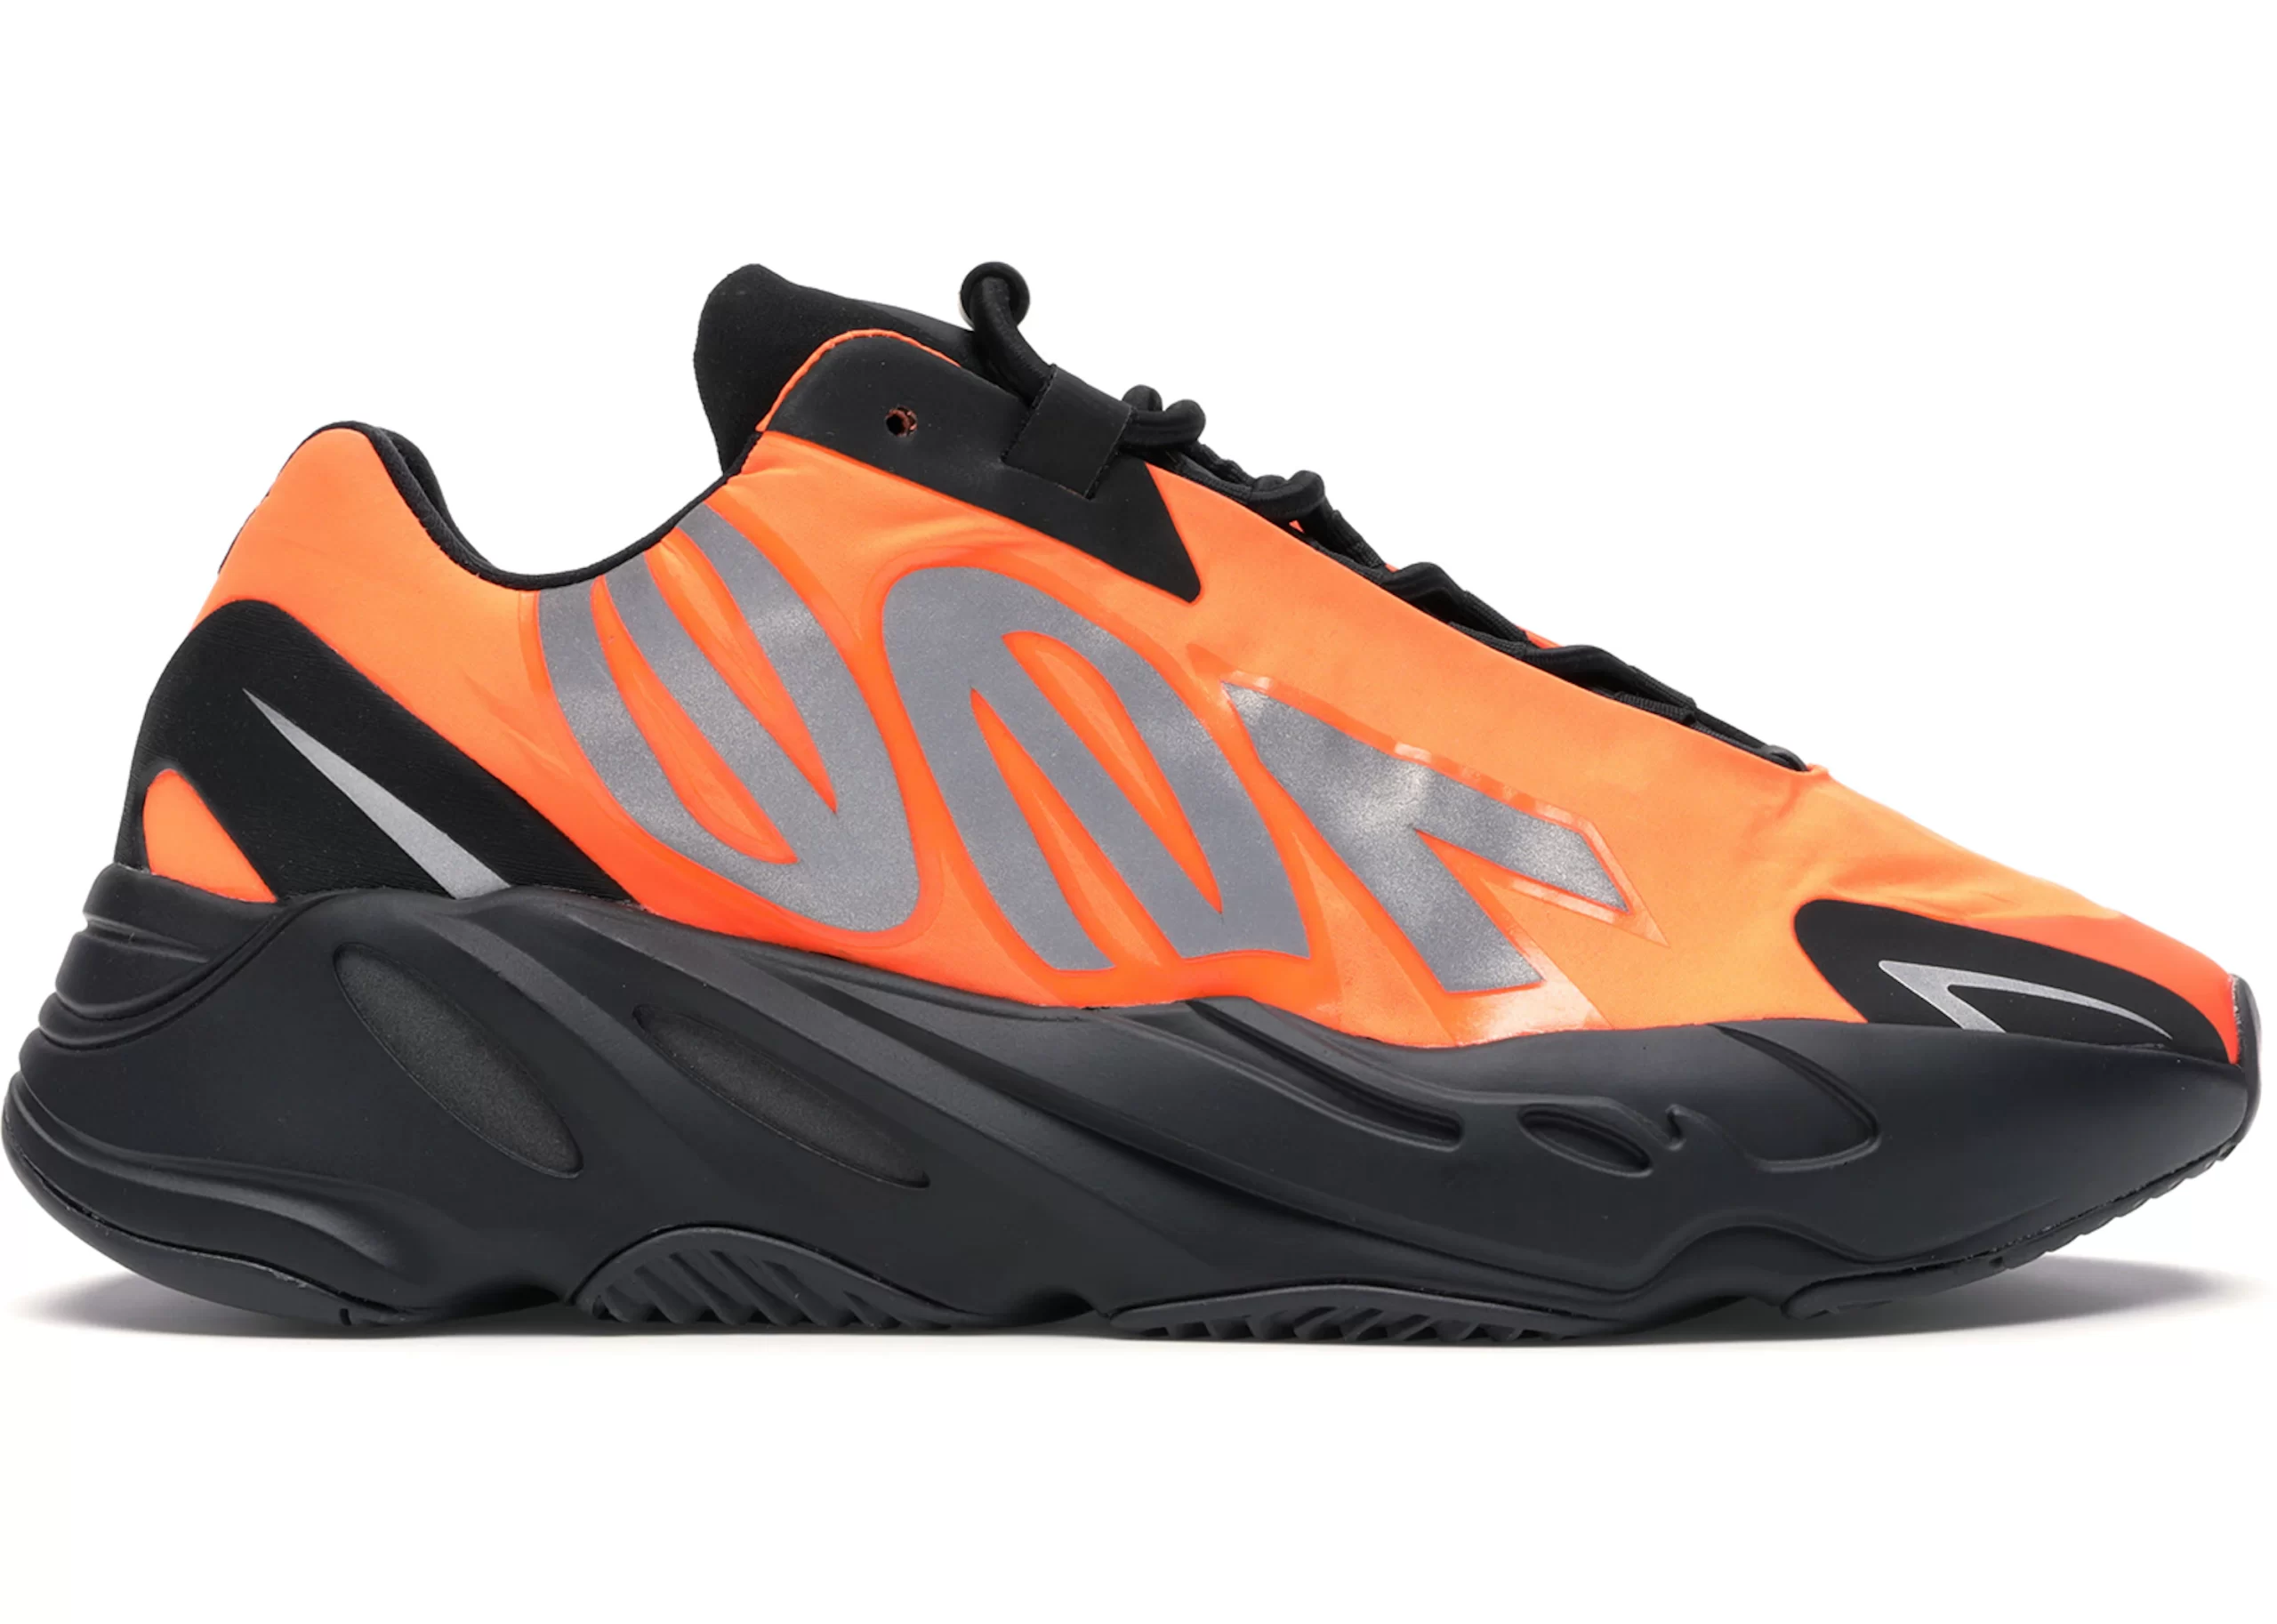 Adidas Yeezy Boost 700 Mnvn Orange